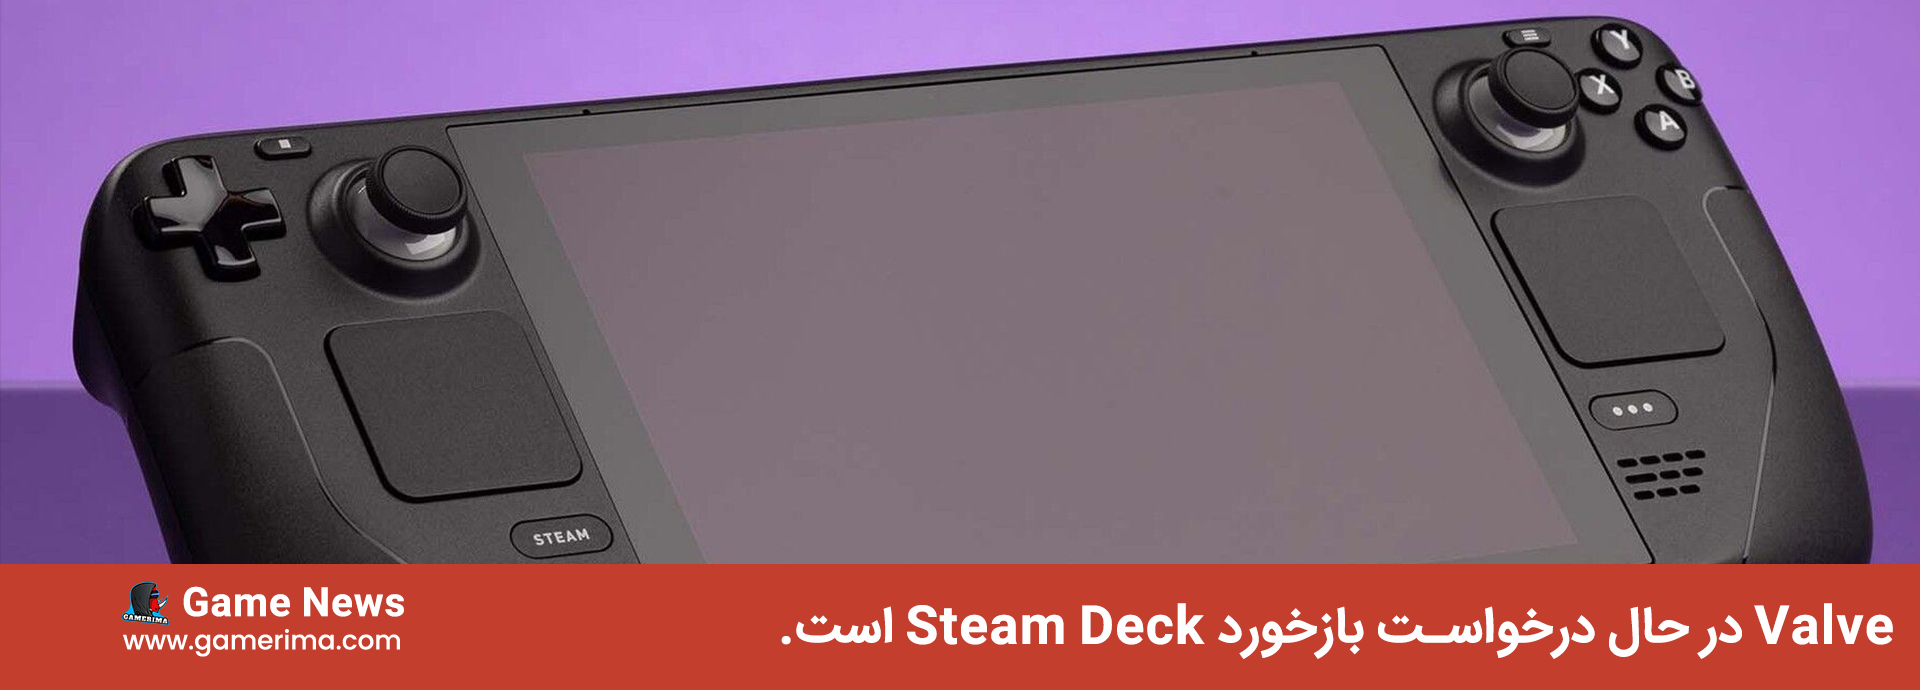 Valve در حال درخواست بازخورد Steam Deck است.